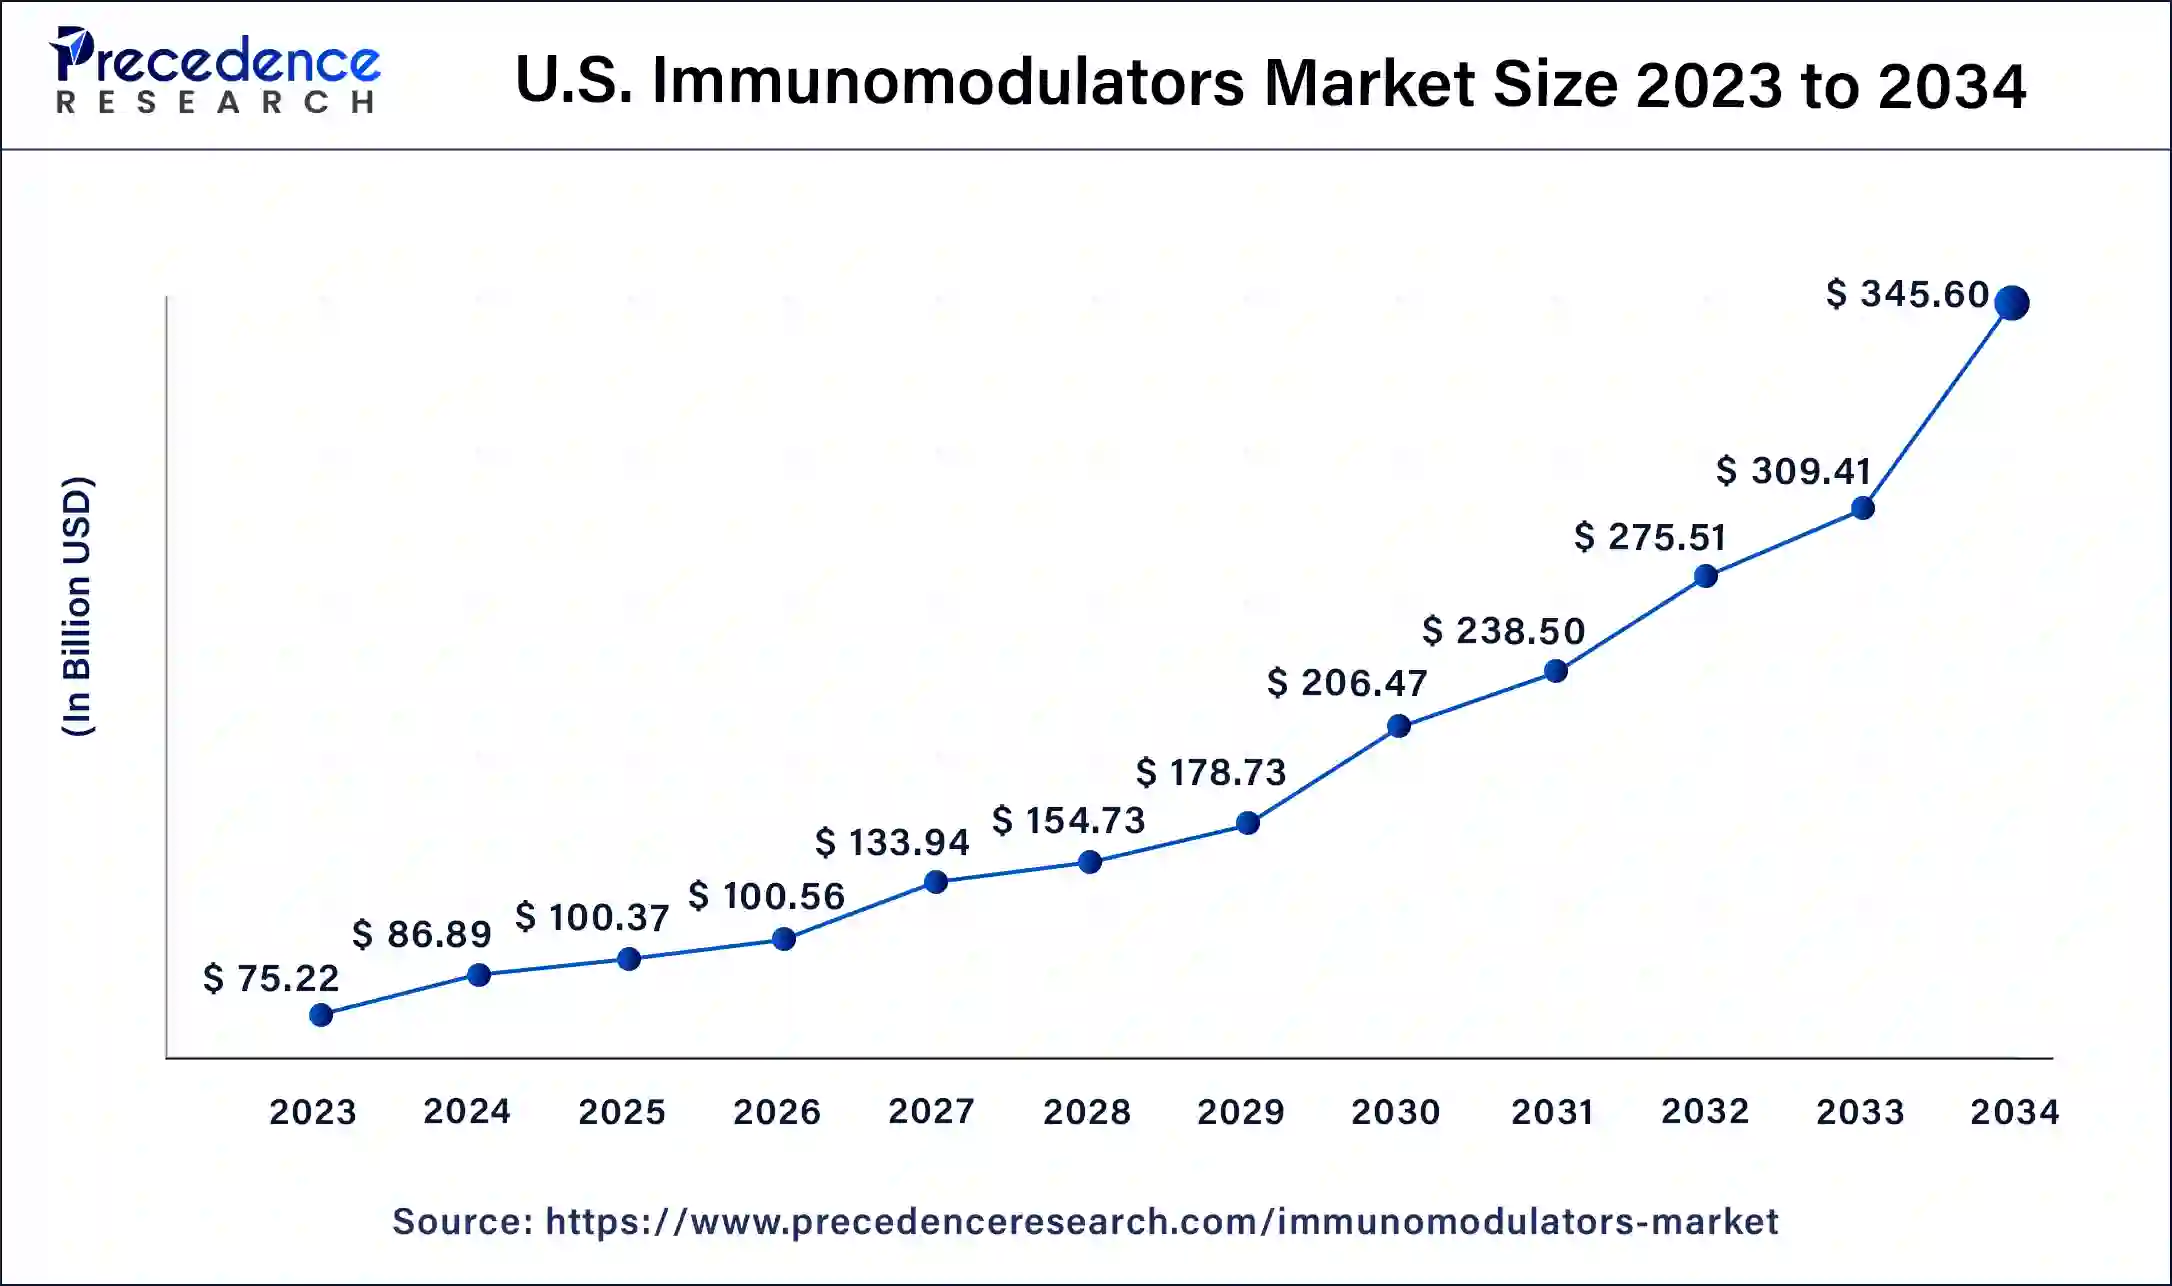 U.S. Immunomodulators Market Size 2024 To 2034